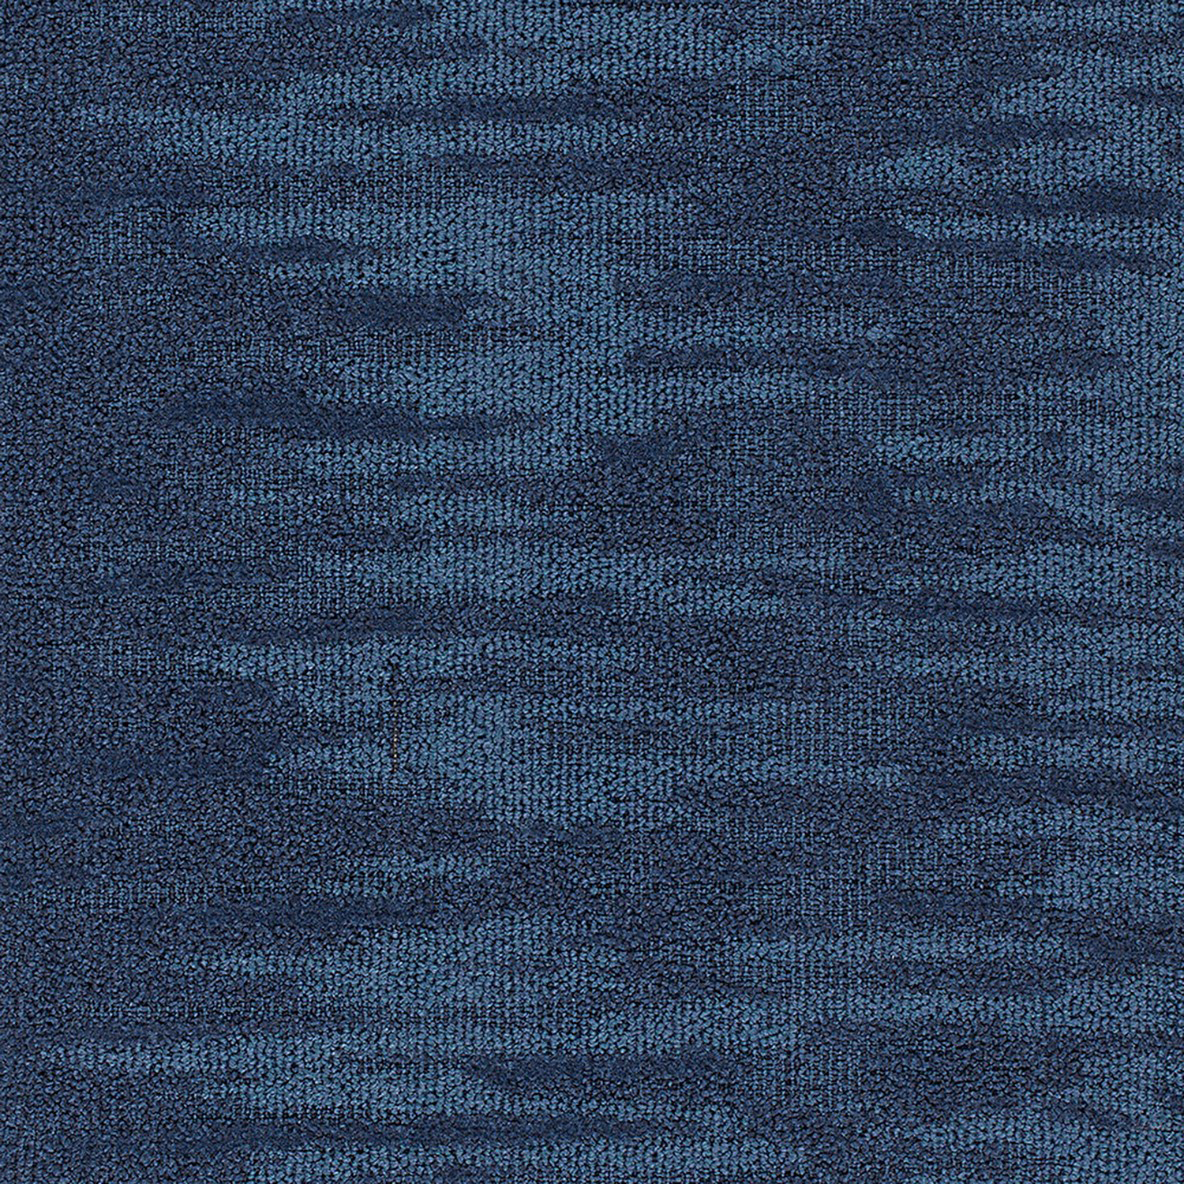 Baltic Blue color close up Up and Away Commercial Carpet Tile .30 Inch x 50x50 cm per Tile